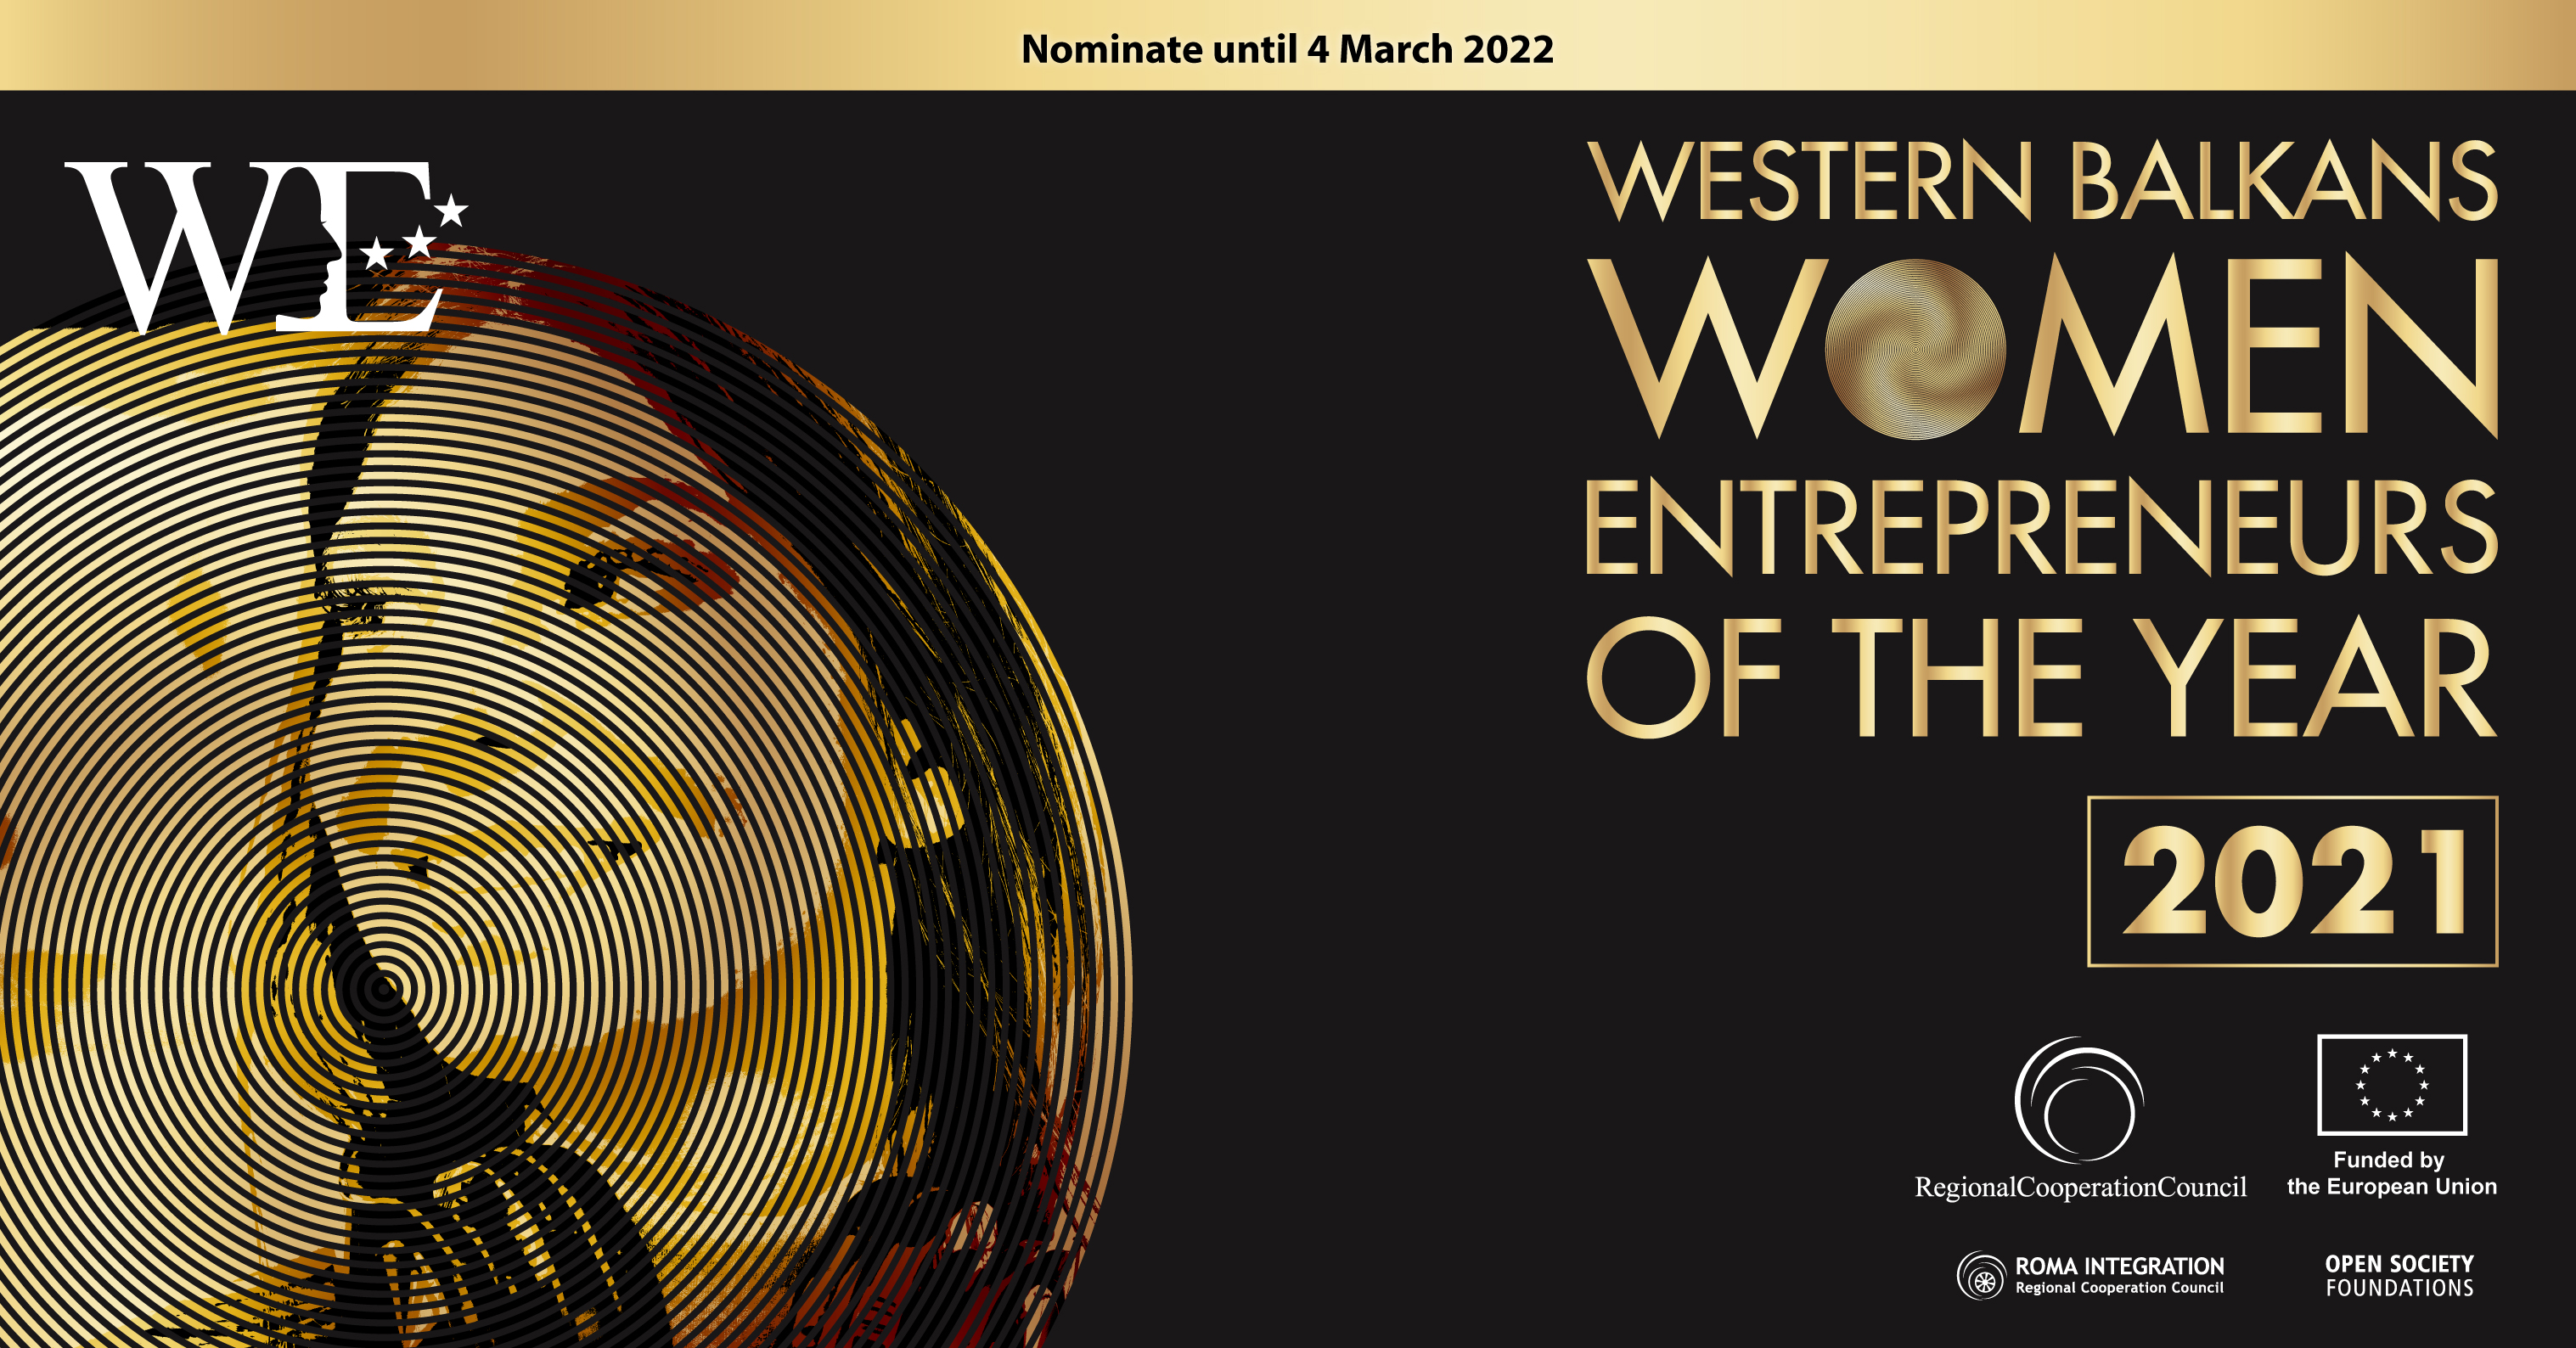 Western Balkans Women Entrepreneurs of the Year: Judging panel